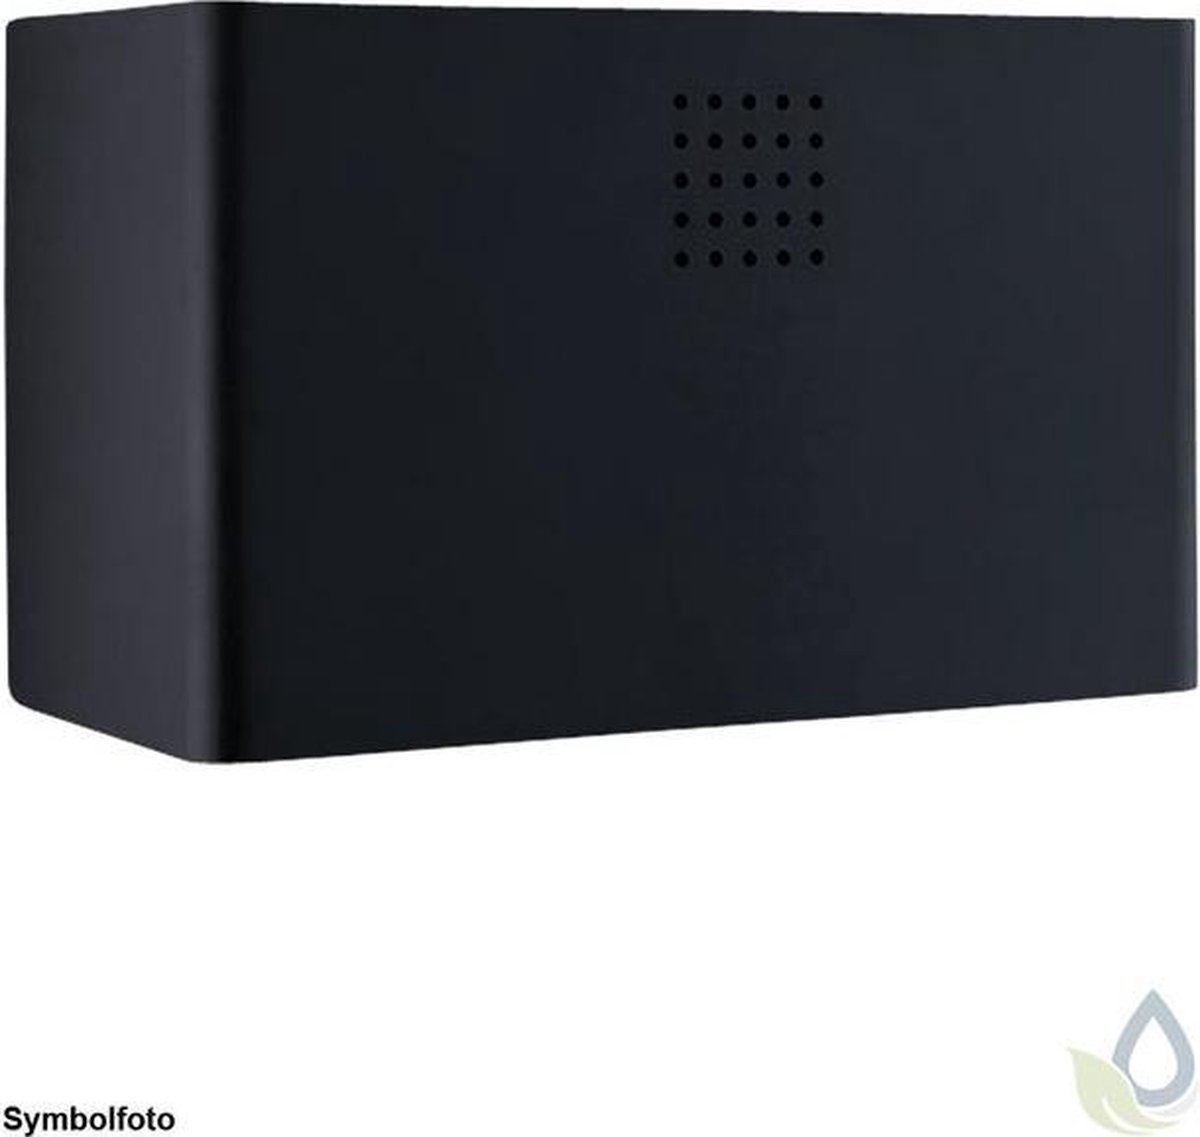 Elegant Proox® handdryer in black design with high power 500W